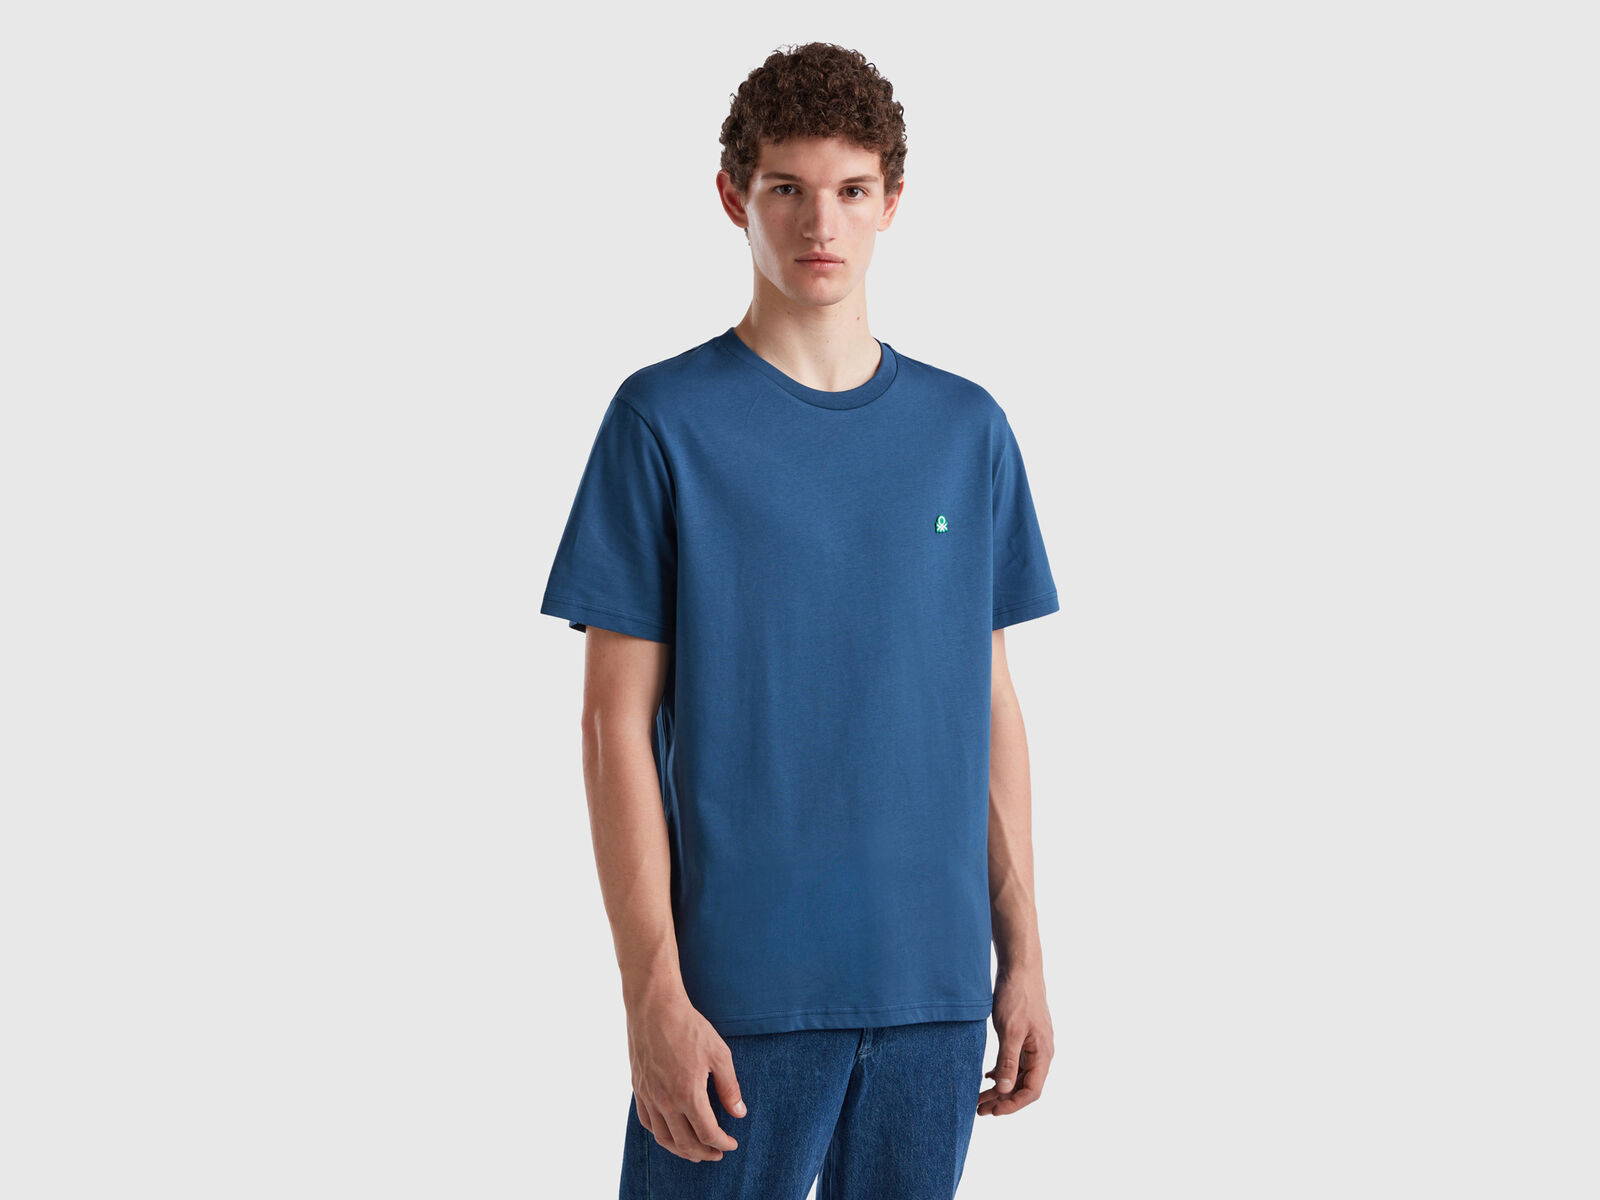 organic - Air cotton Benetton Blue | t-shirt Force basic 100%